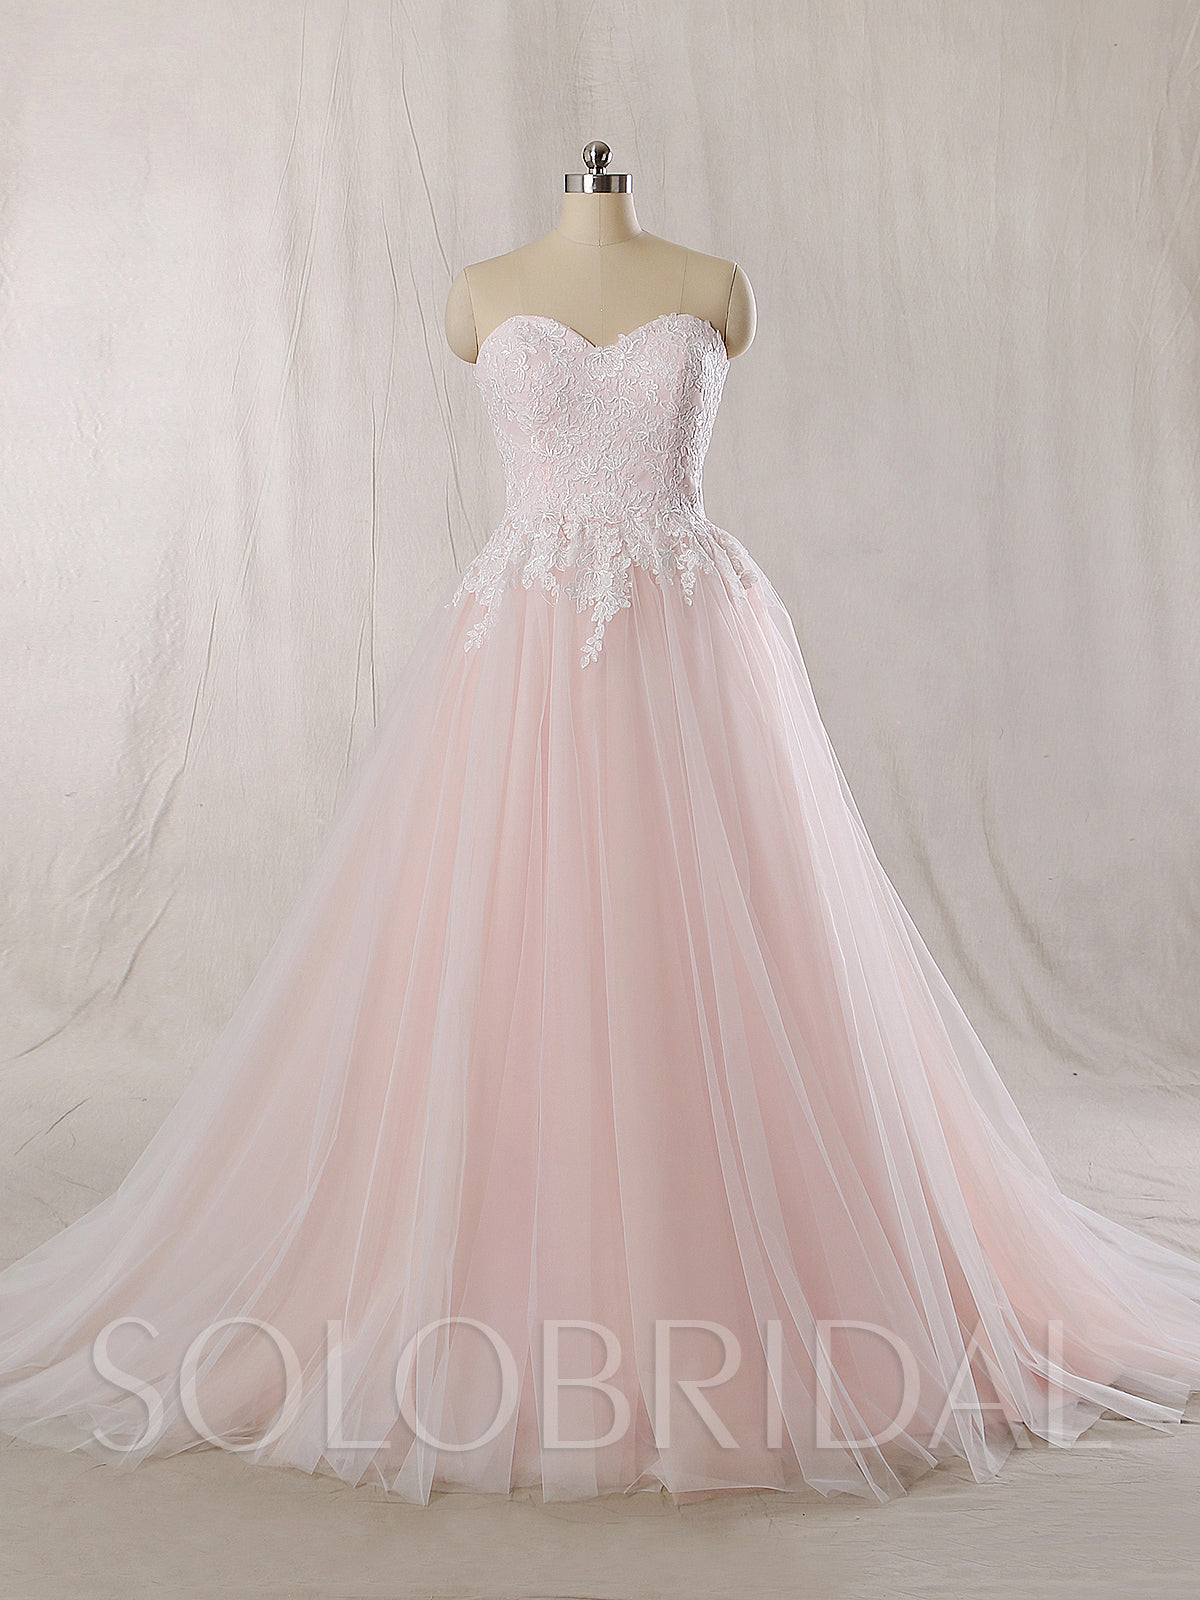 Baby Pink Wedding Dress